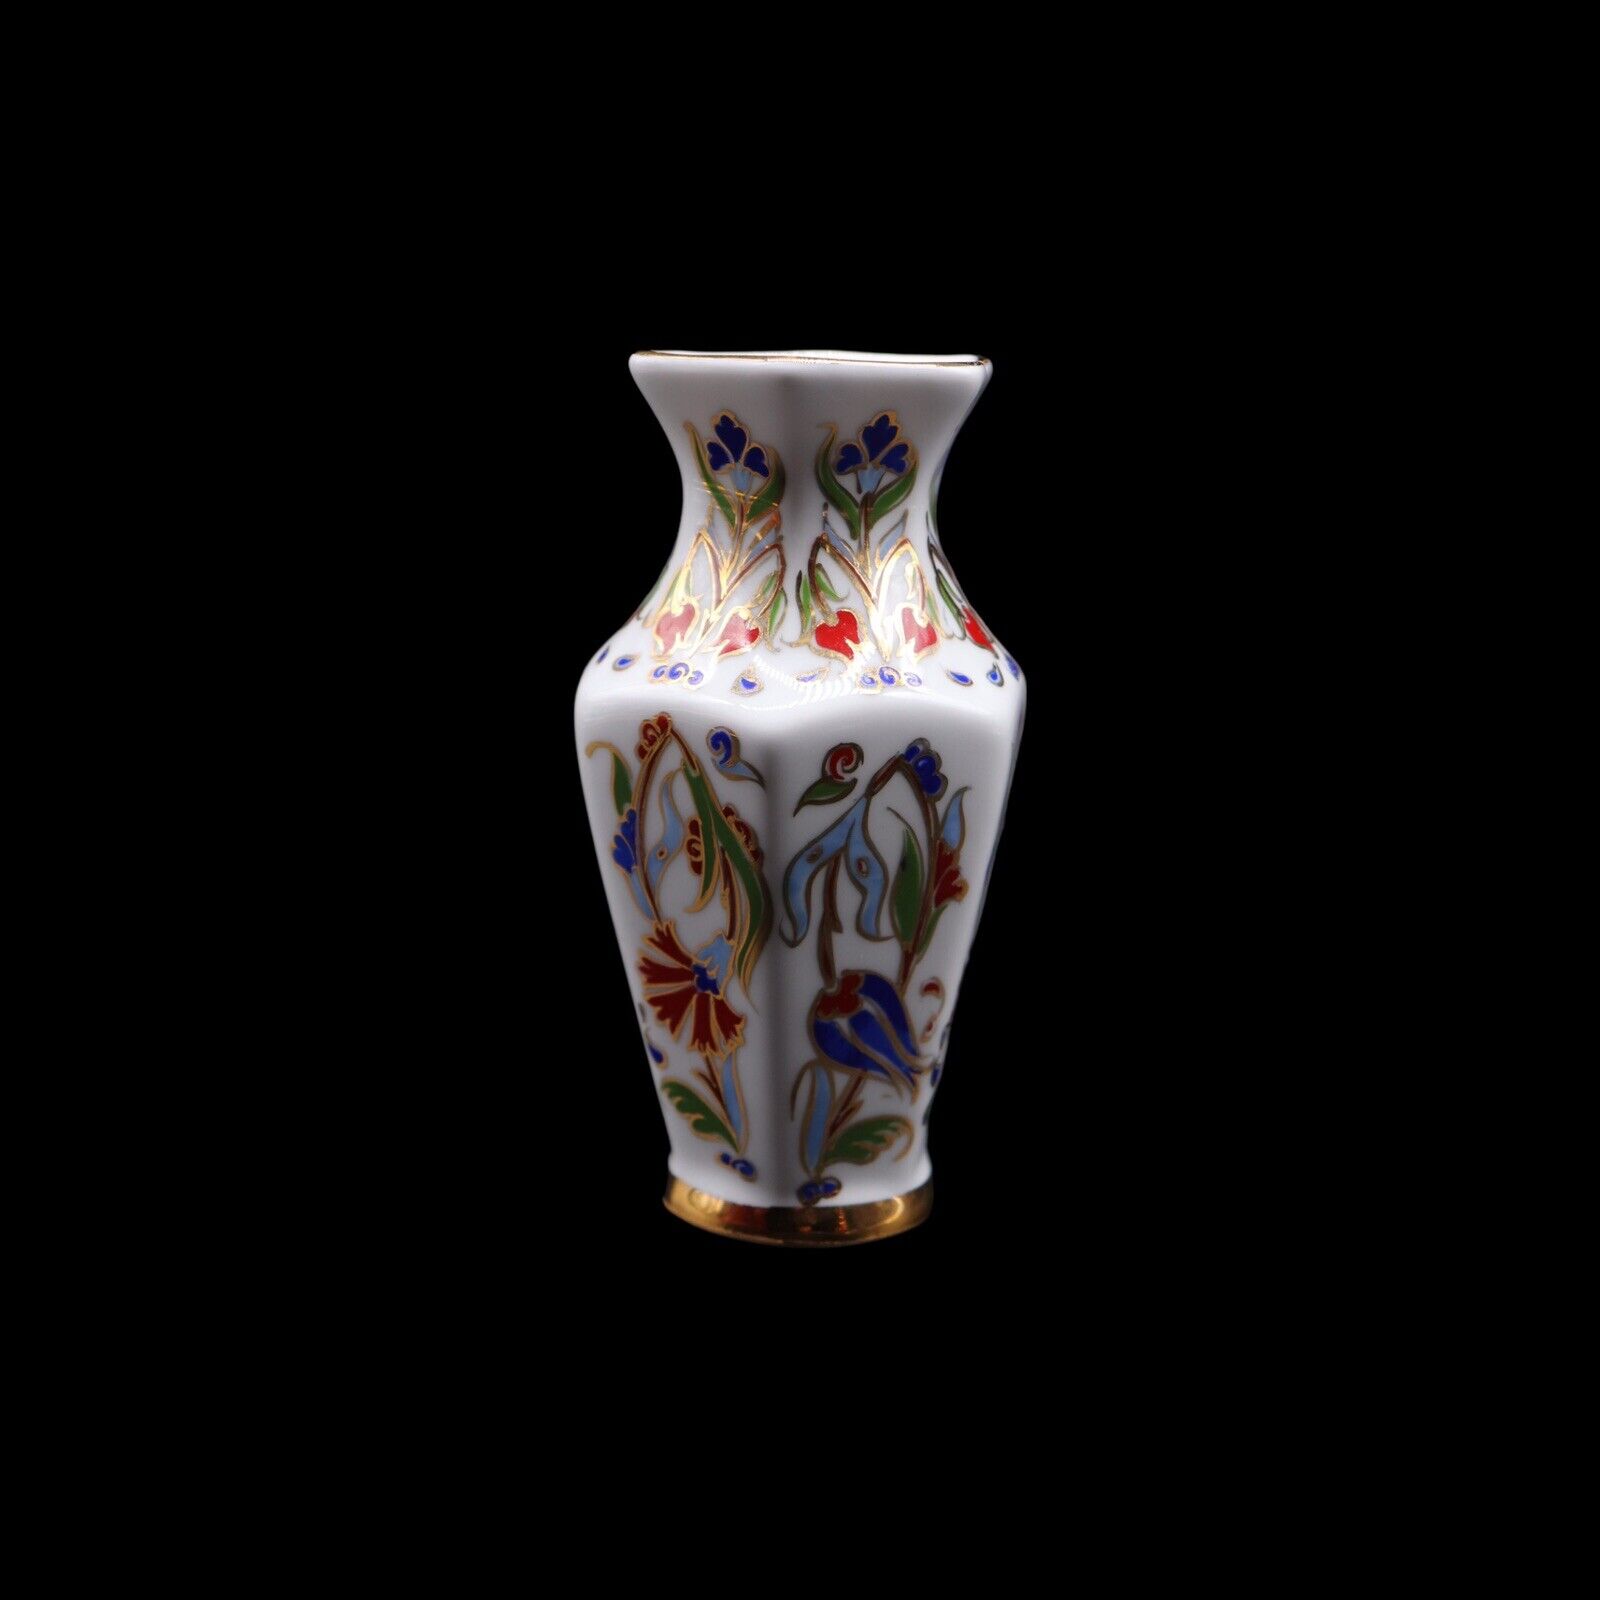 Güral Porselen Turkish Porcelain Miniature Vase with Original Box